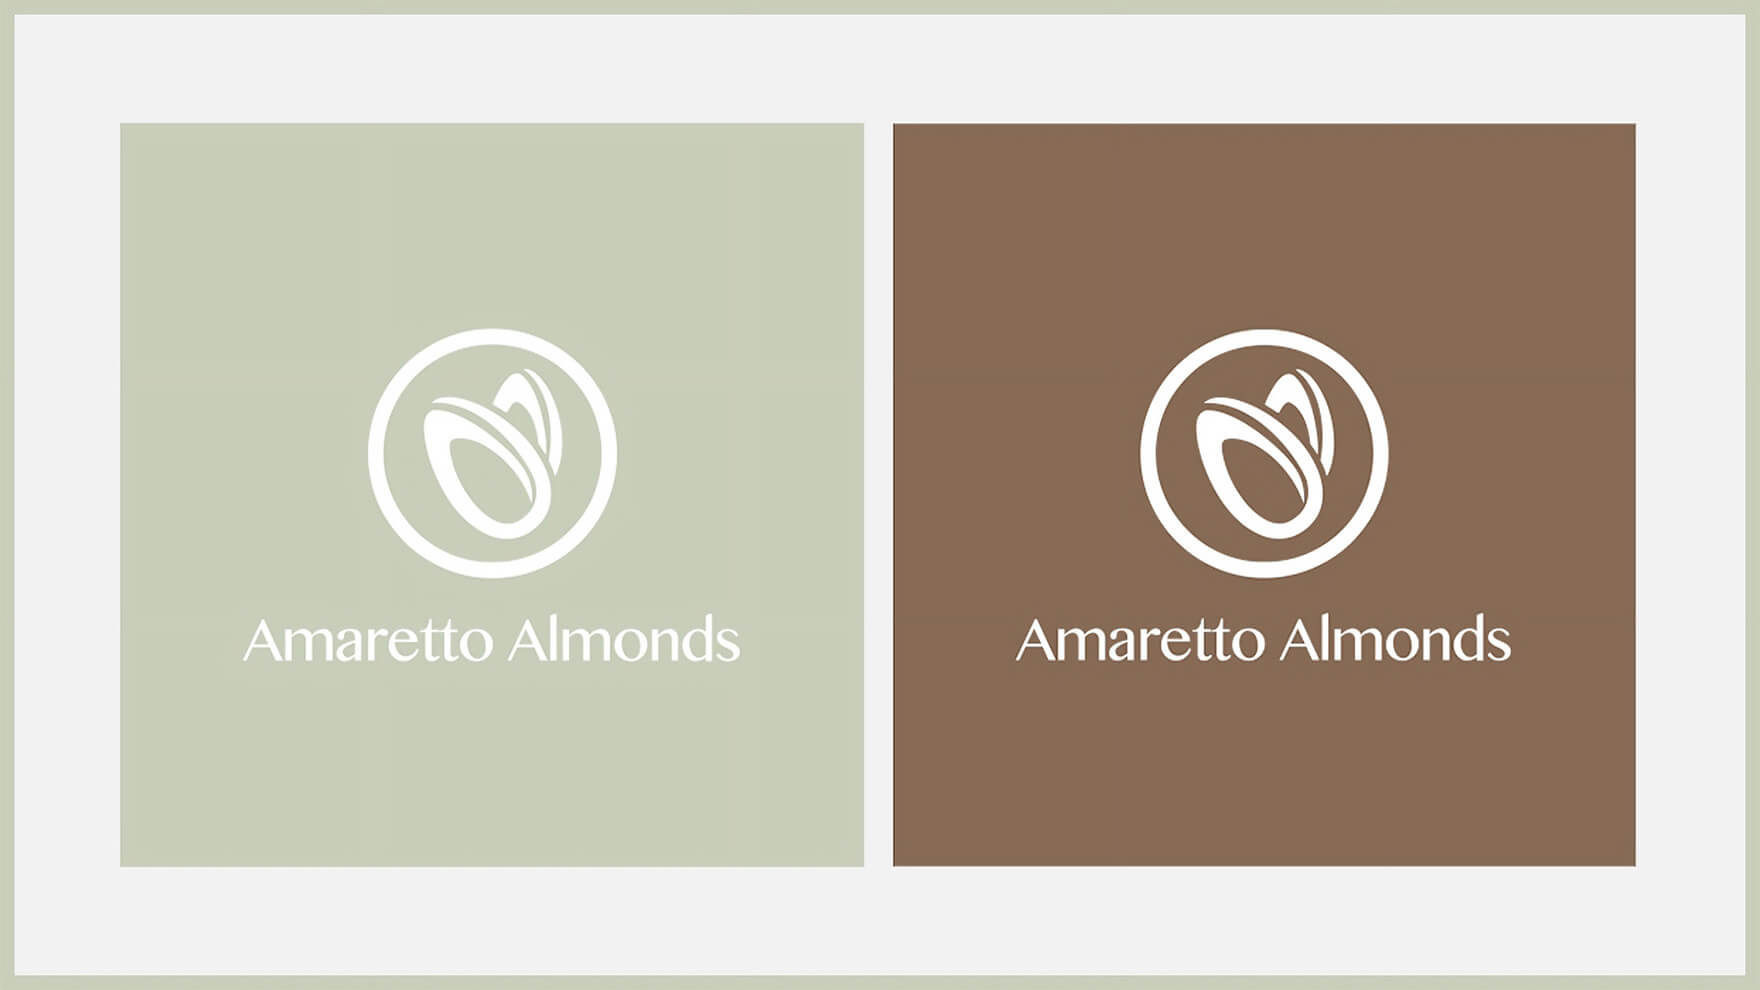 Branding Agency Hong Kong_Amaretto Almonds_Corporate Identity Design_CheddarMedia_02_1760